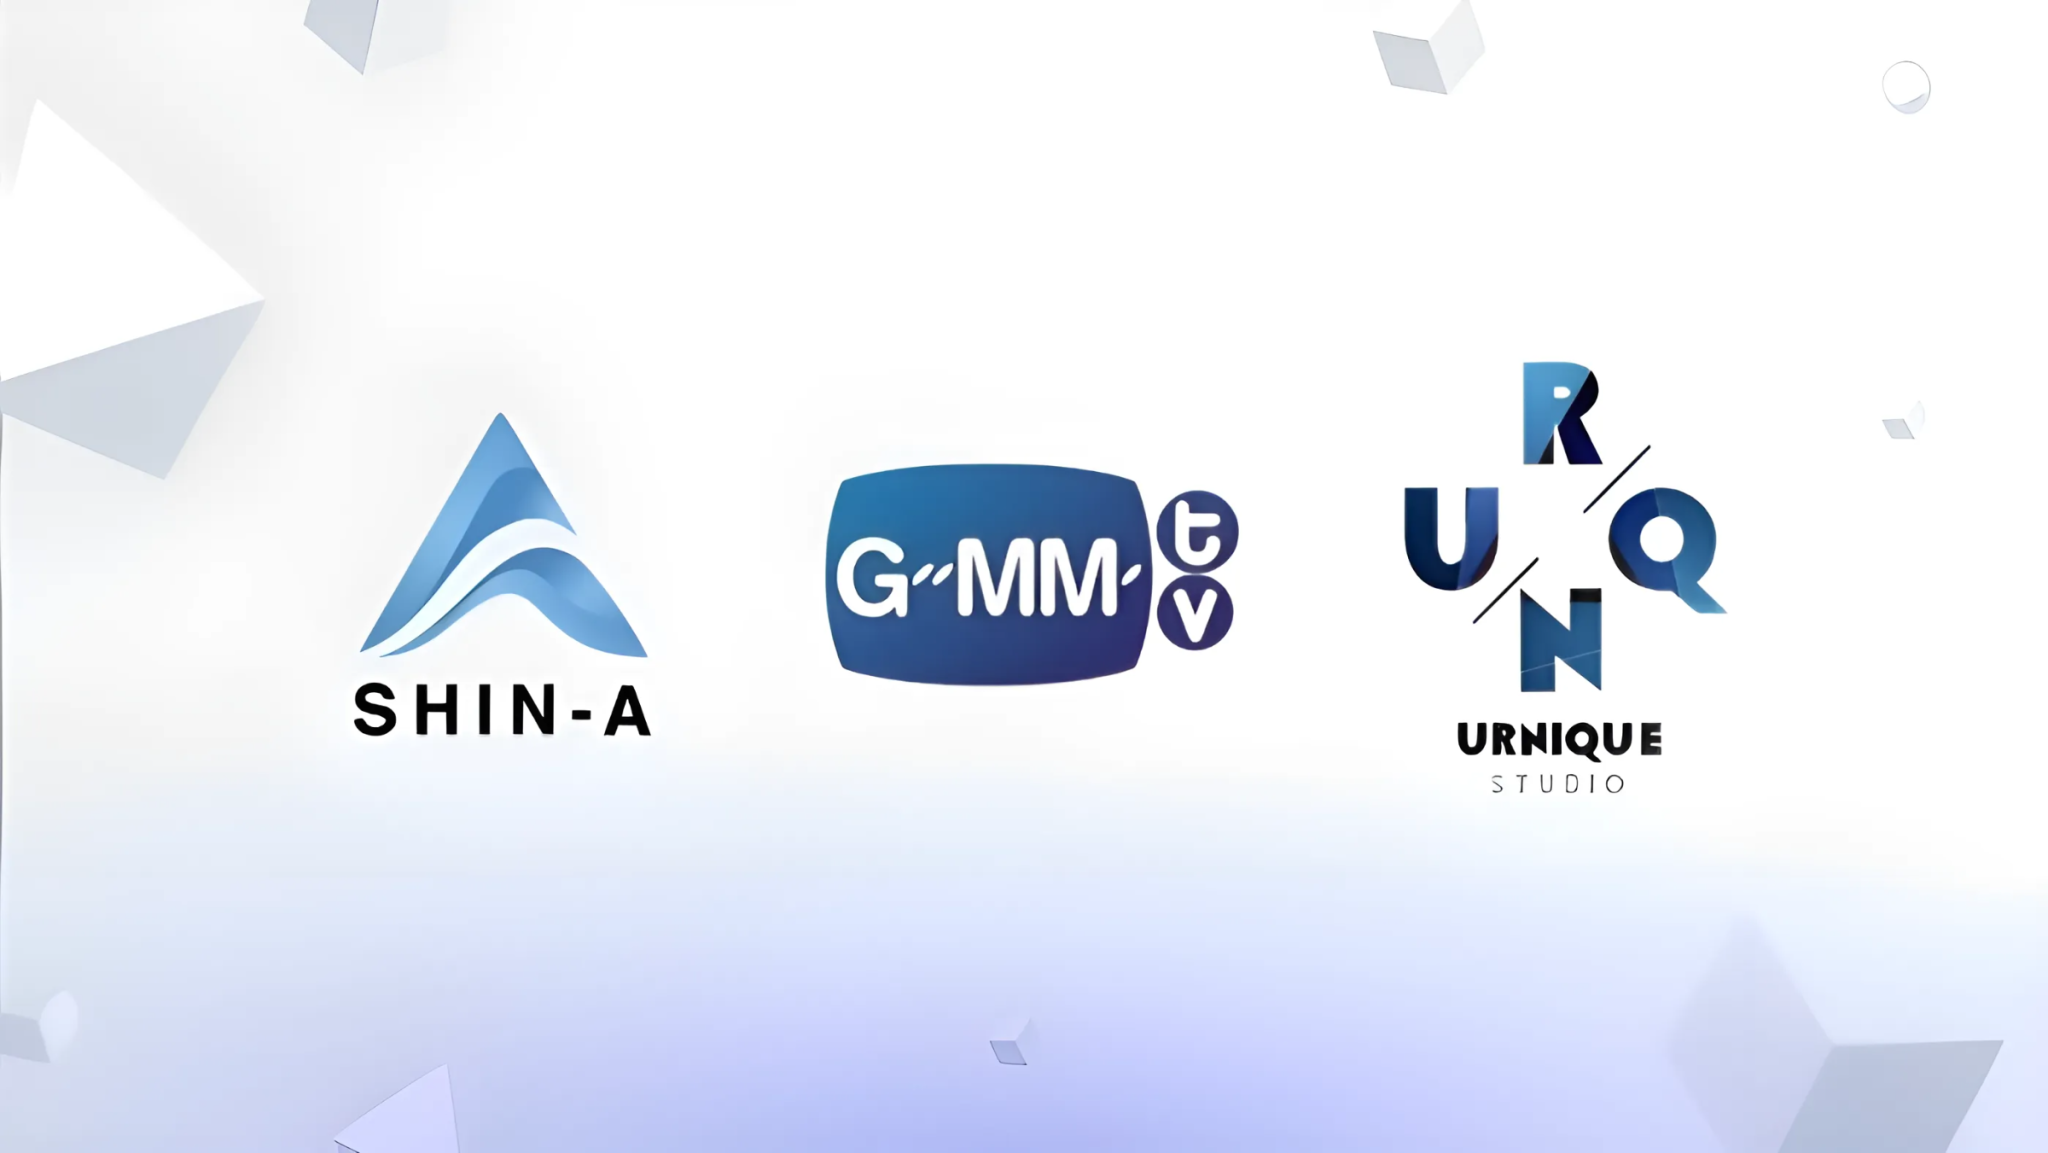 GMMTV ก้าวเข้าสู่วงการเกมอย่างเป็นทางการโดยมี Partner อย่าง SHIN-A และ Urnique Studio